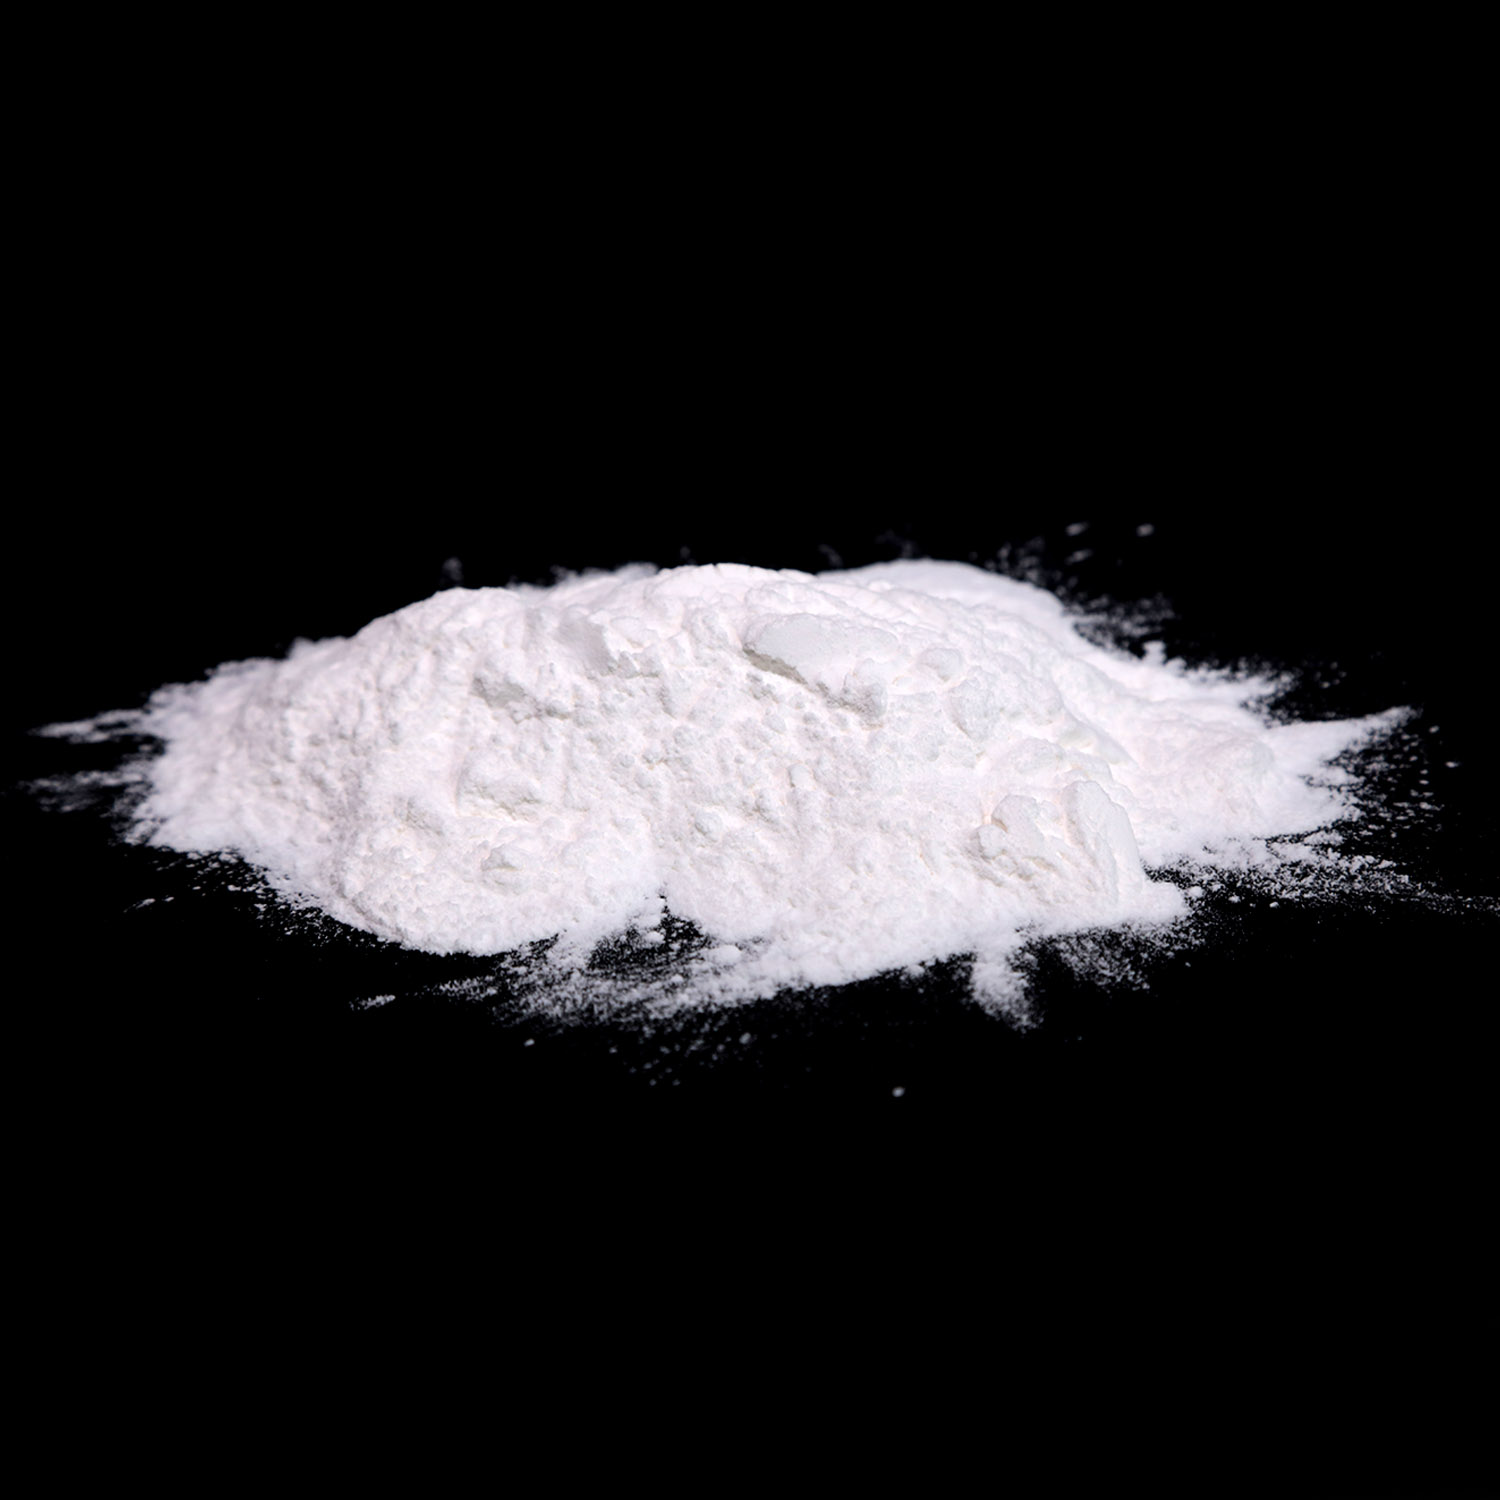 Pharmaceutical Intermediates Chemical Powder N-BOC-aniline CAS 3422-01-3 with Best Price